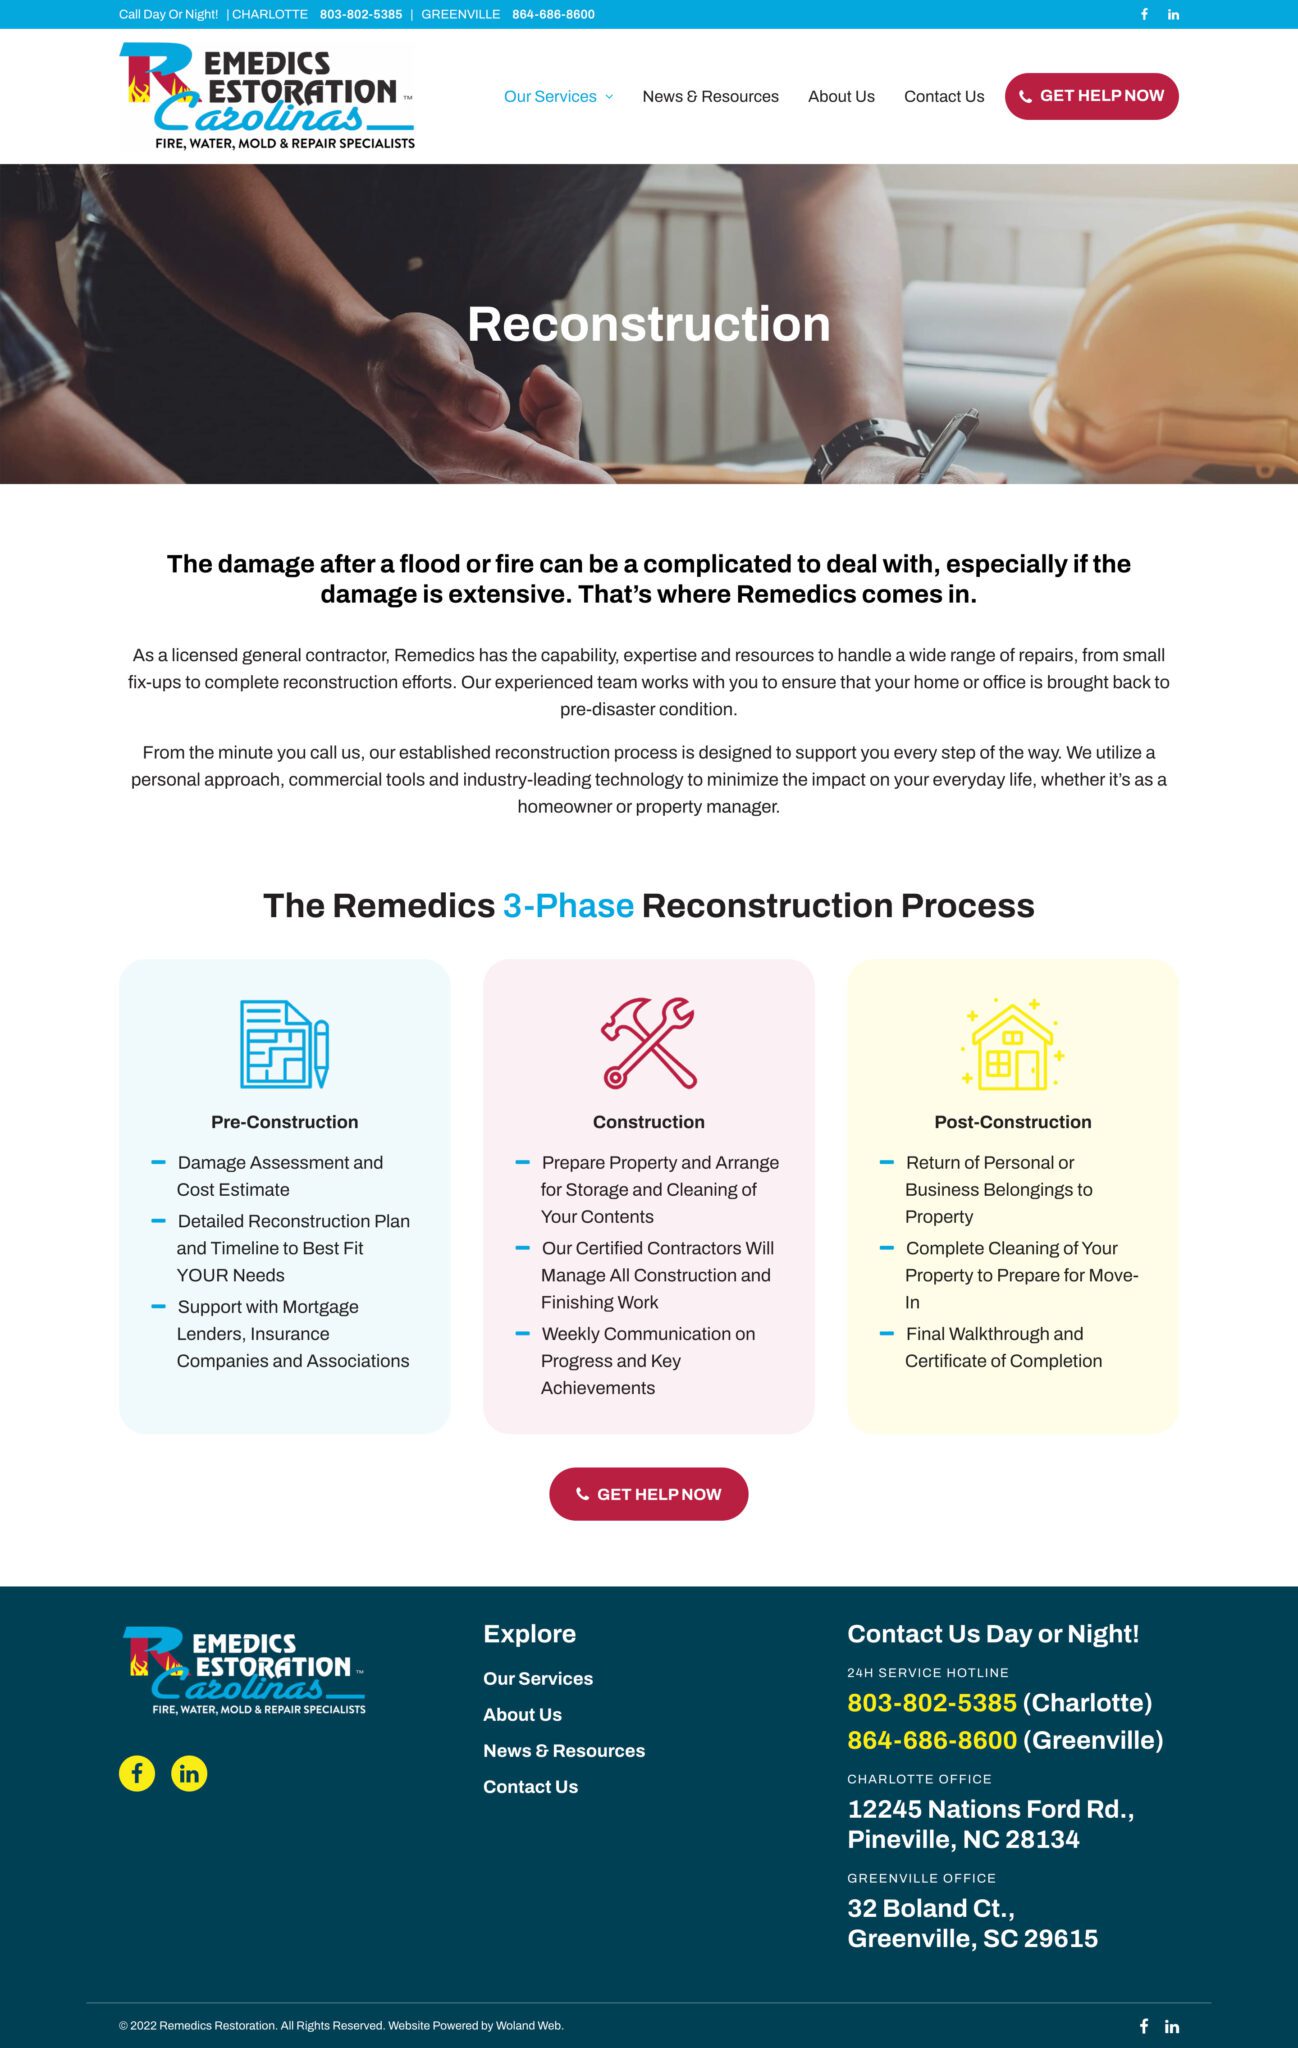 Remedics Restoration website reconstruction page screenshot